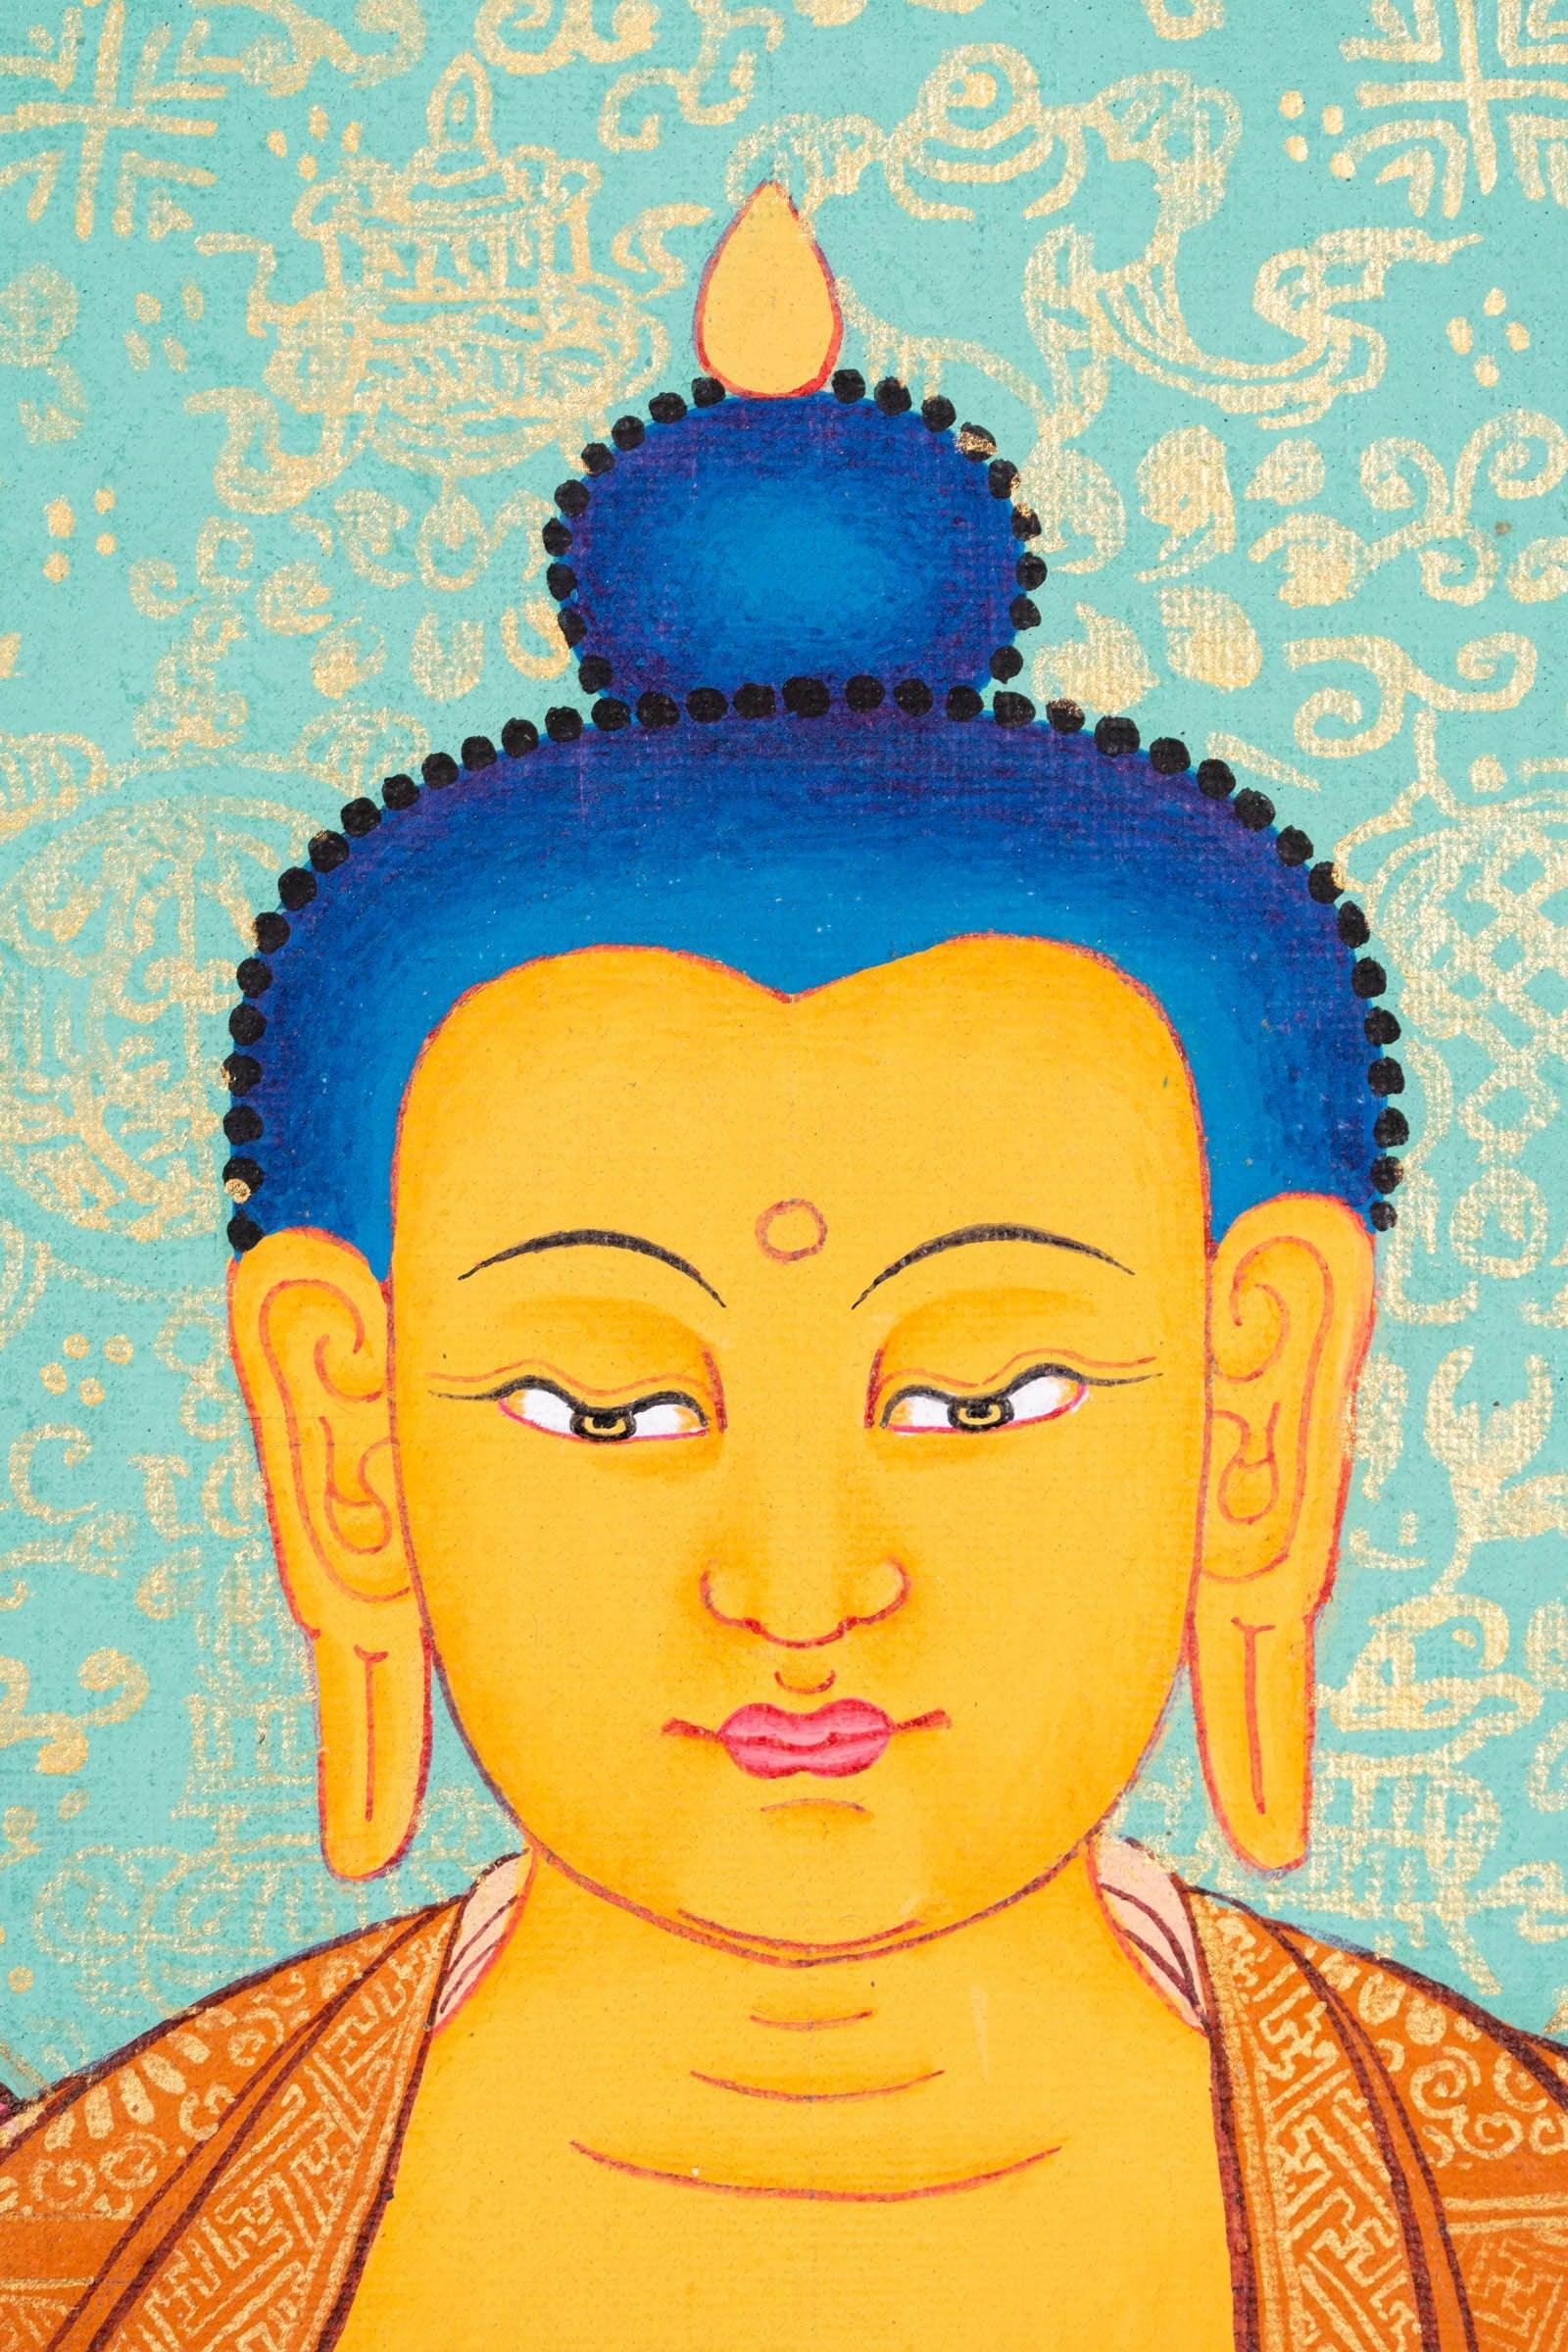 Thangka Painting of Shakyamuni Buddha with 35 buddhas - Himalayas Shop